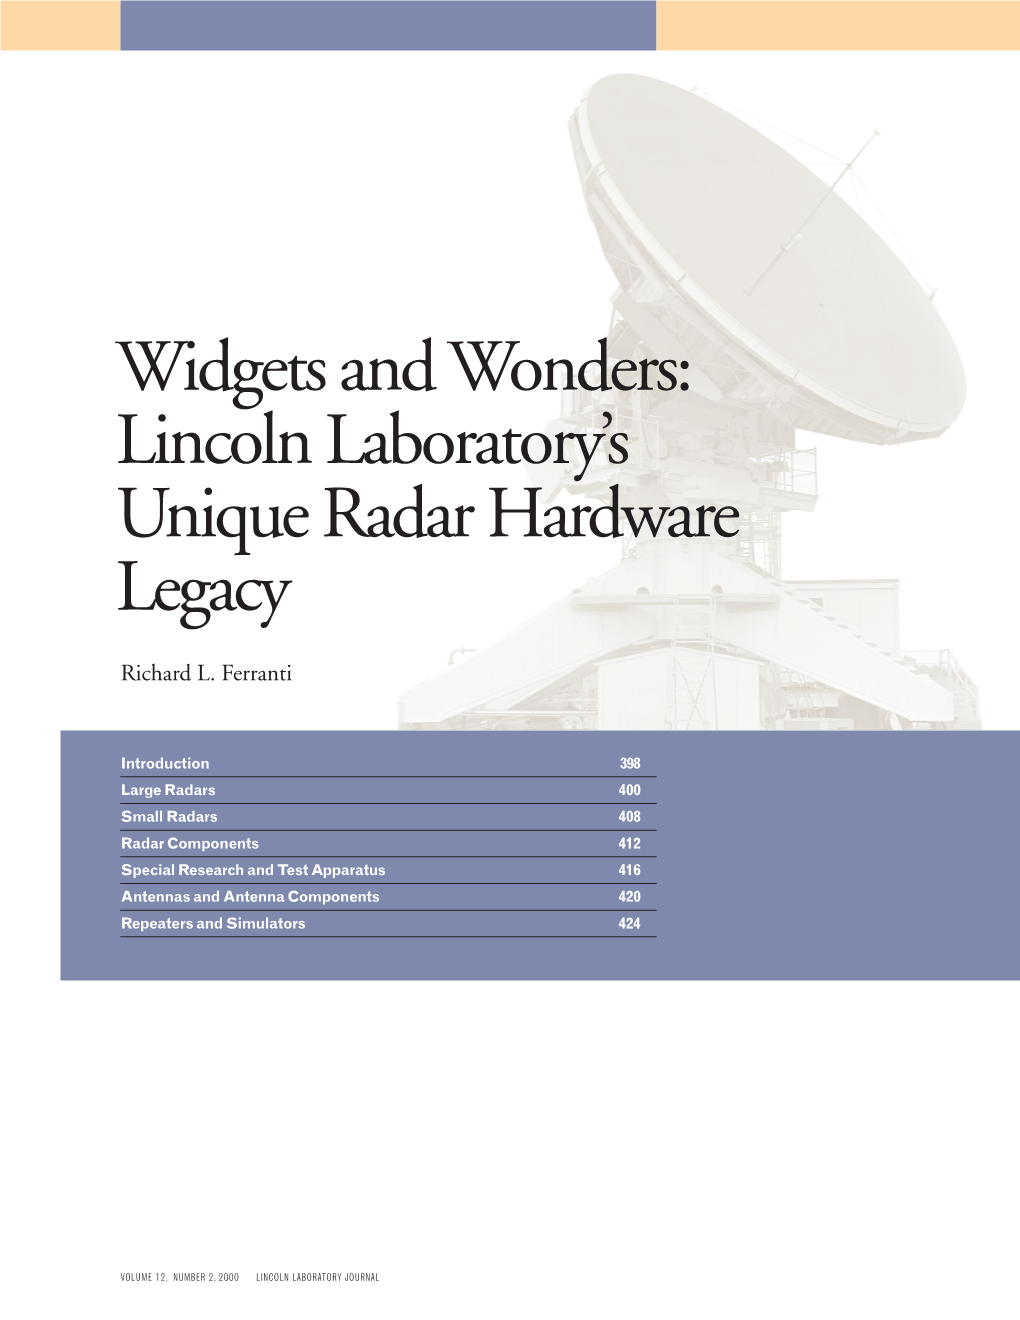 Widgets and Wonders: Lincoln Laboratory's Unique Radar